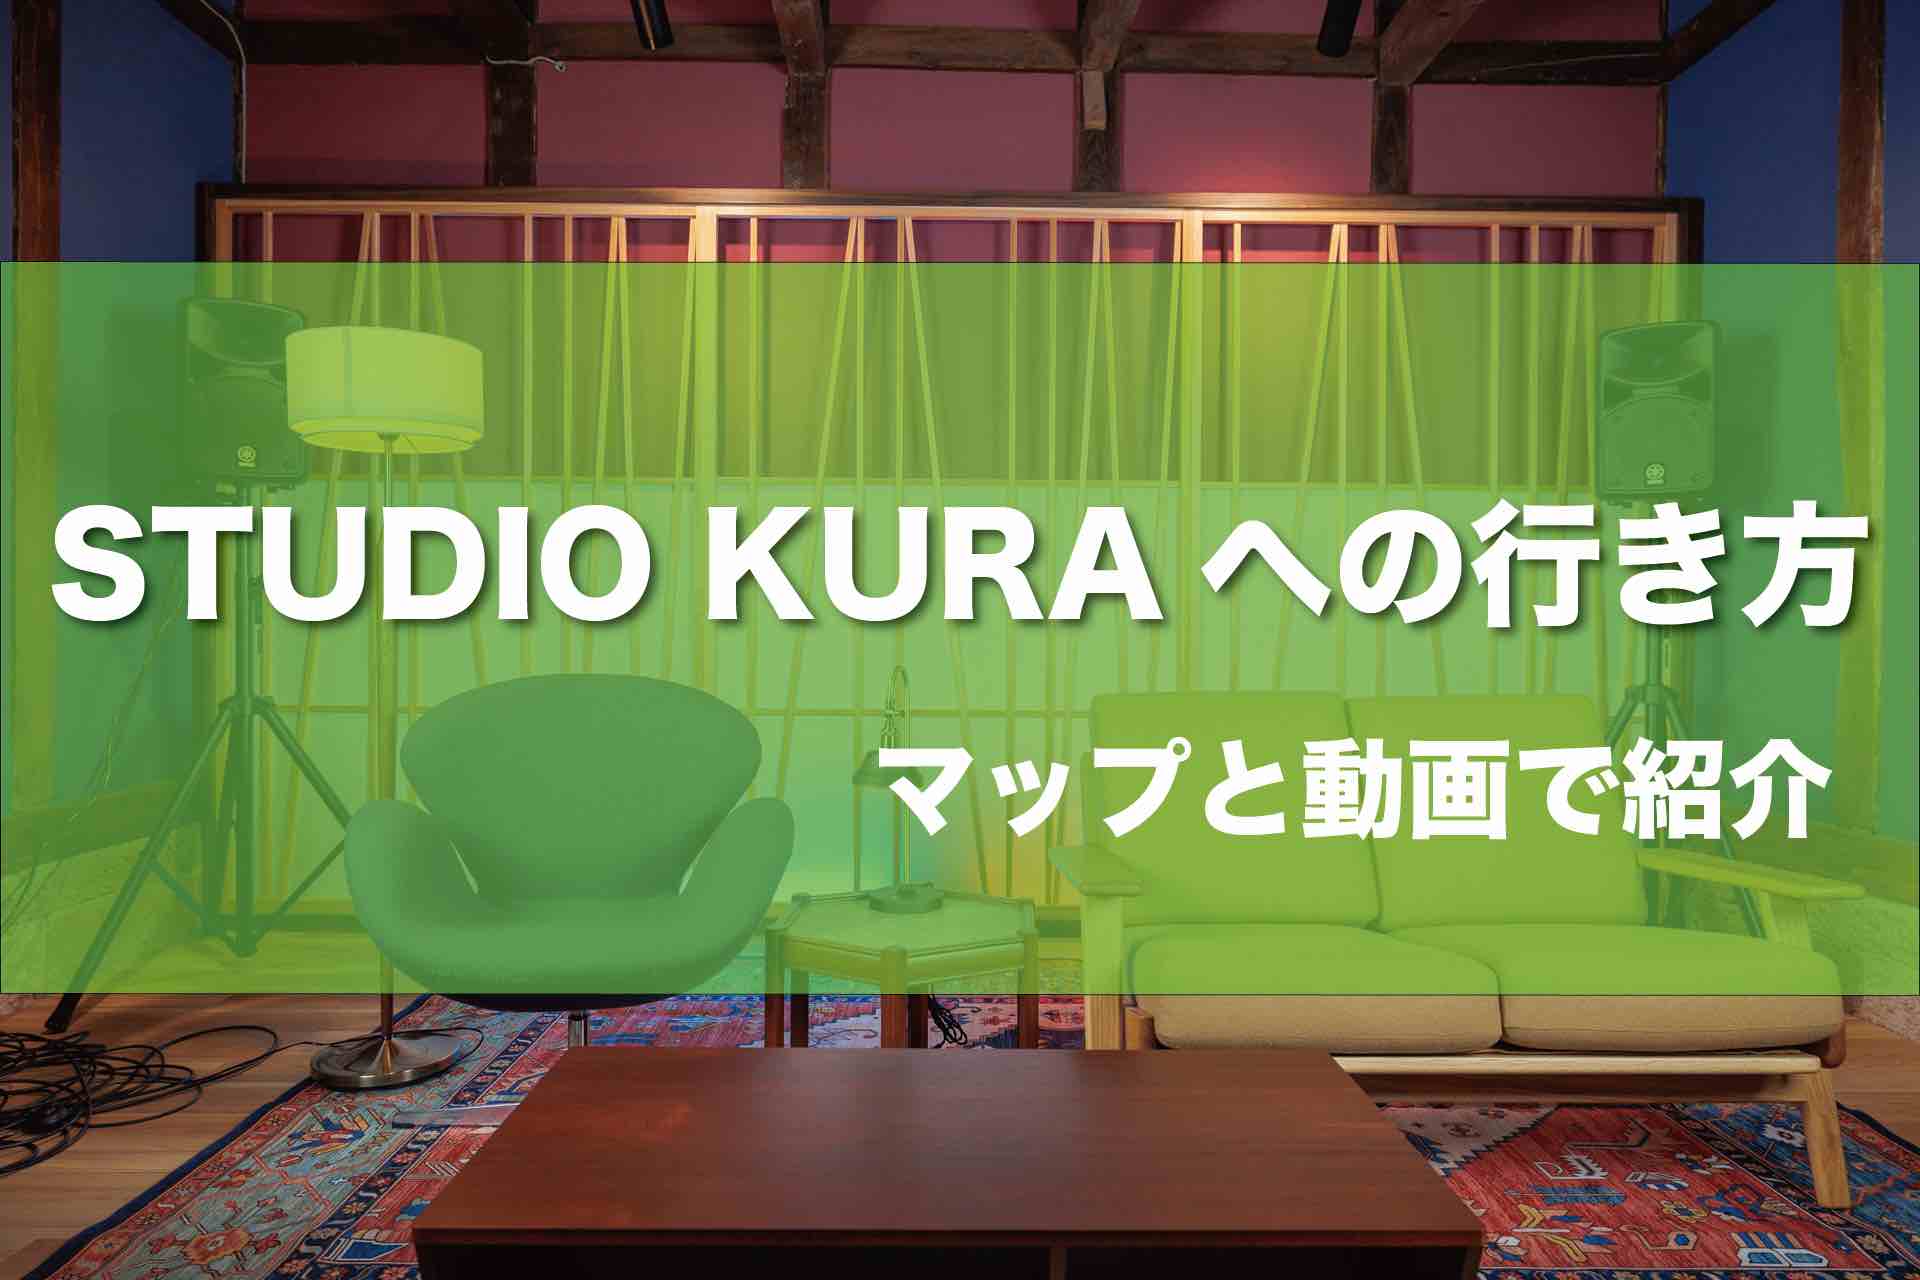 Studio KURAへの行き方を紹介